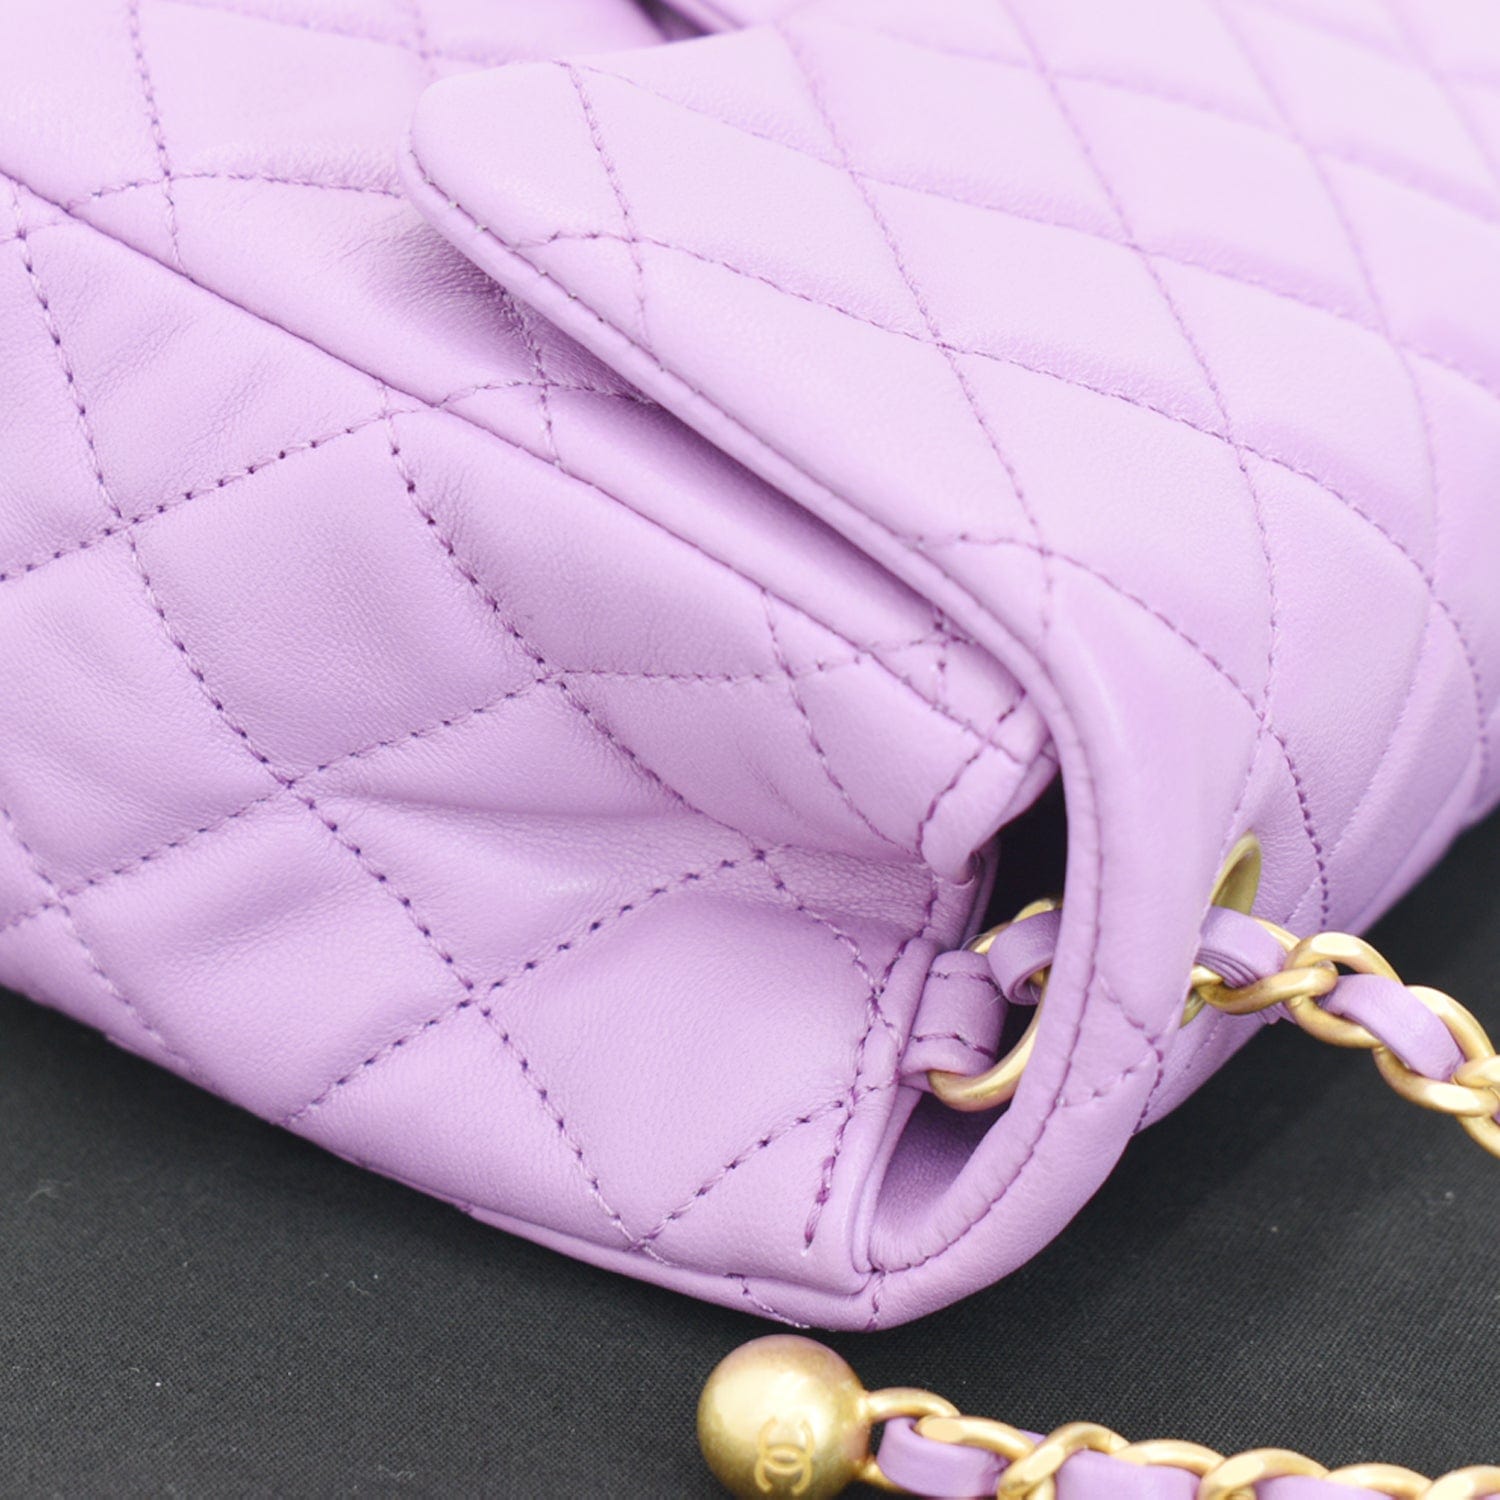 Chanel Purple Leather Flap Bag Chanel